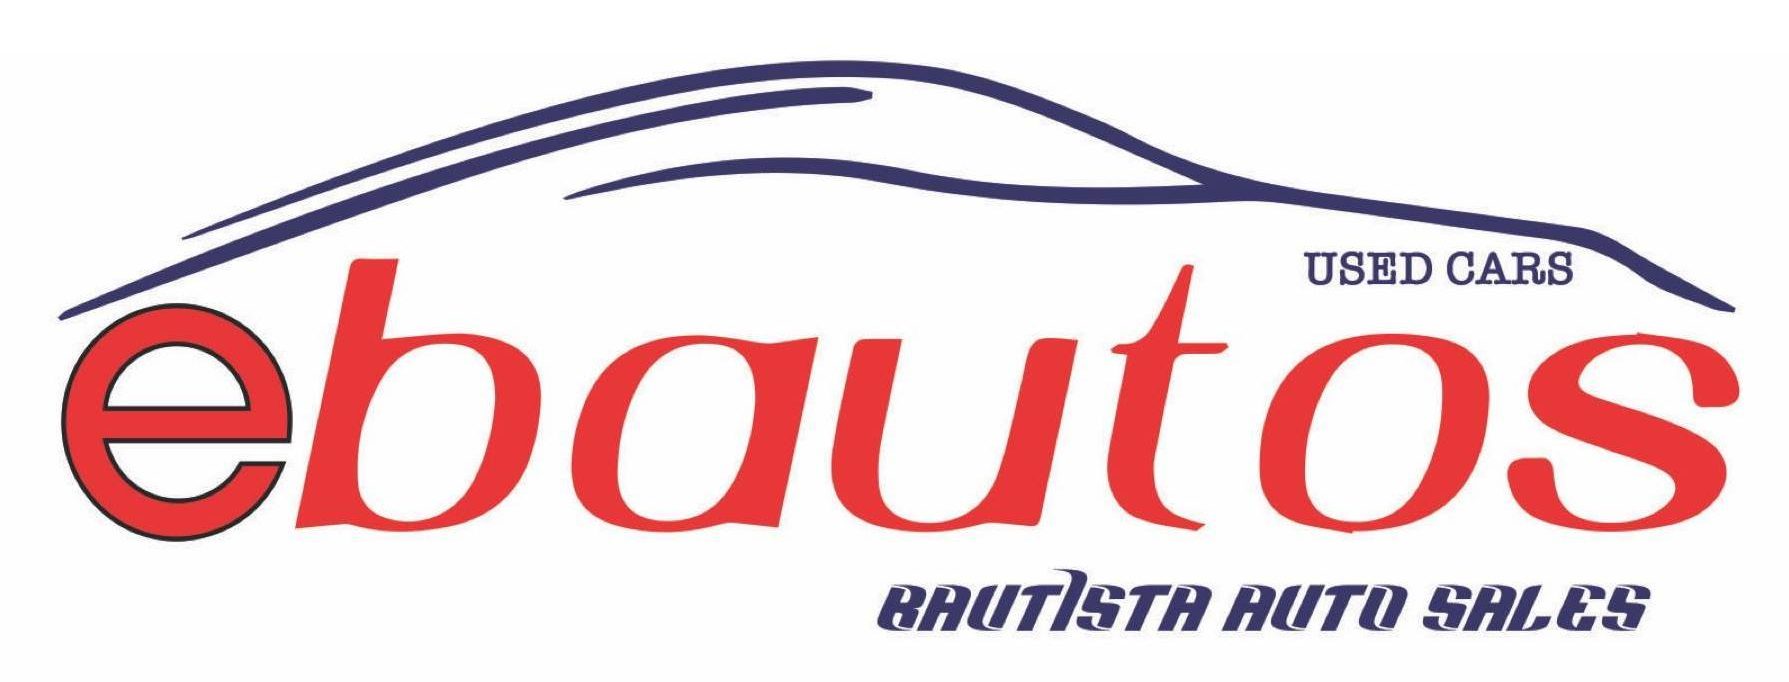 Bautista Auto Sales